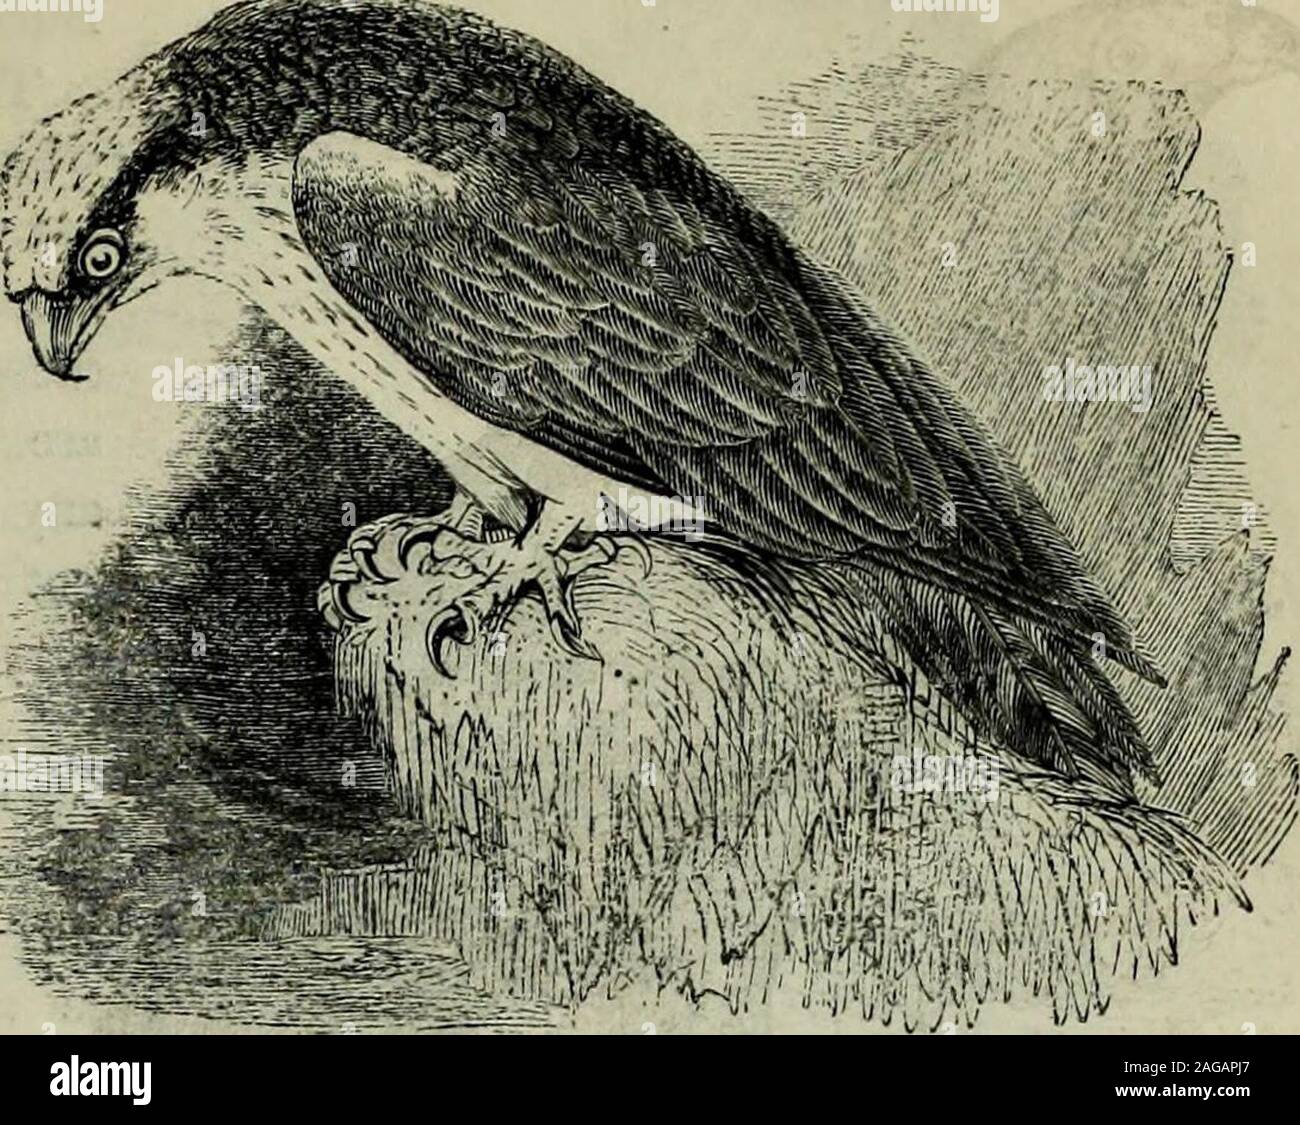 Eagle Clip art - Eagle Png Image With Transparency Download png download -  516*600 - Free Transparent Bald Eagle png Download. - Clip Art Library